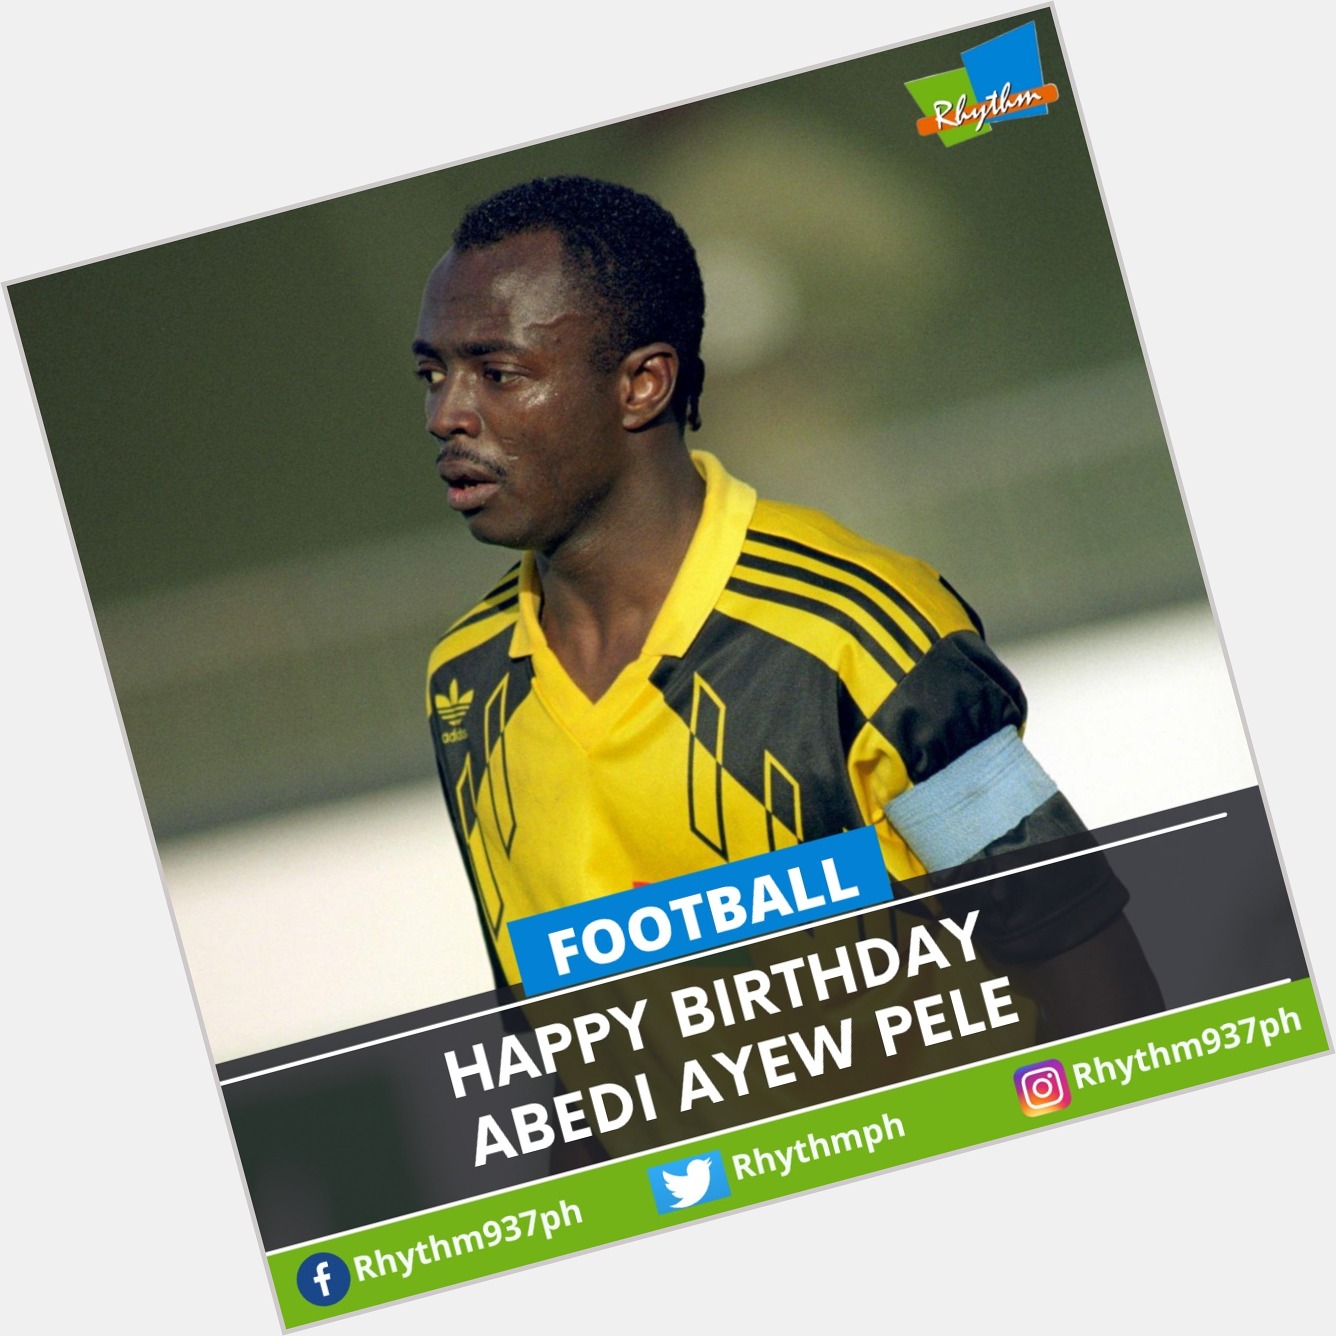 A legendary superstar  Happy birthday to icon Abedi Pele 